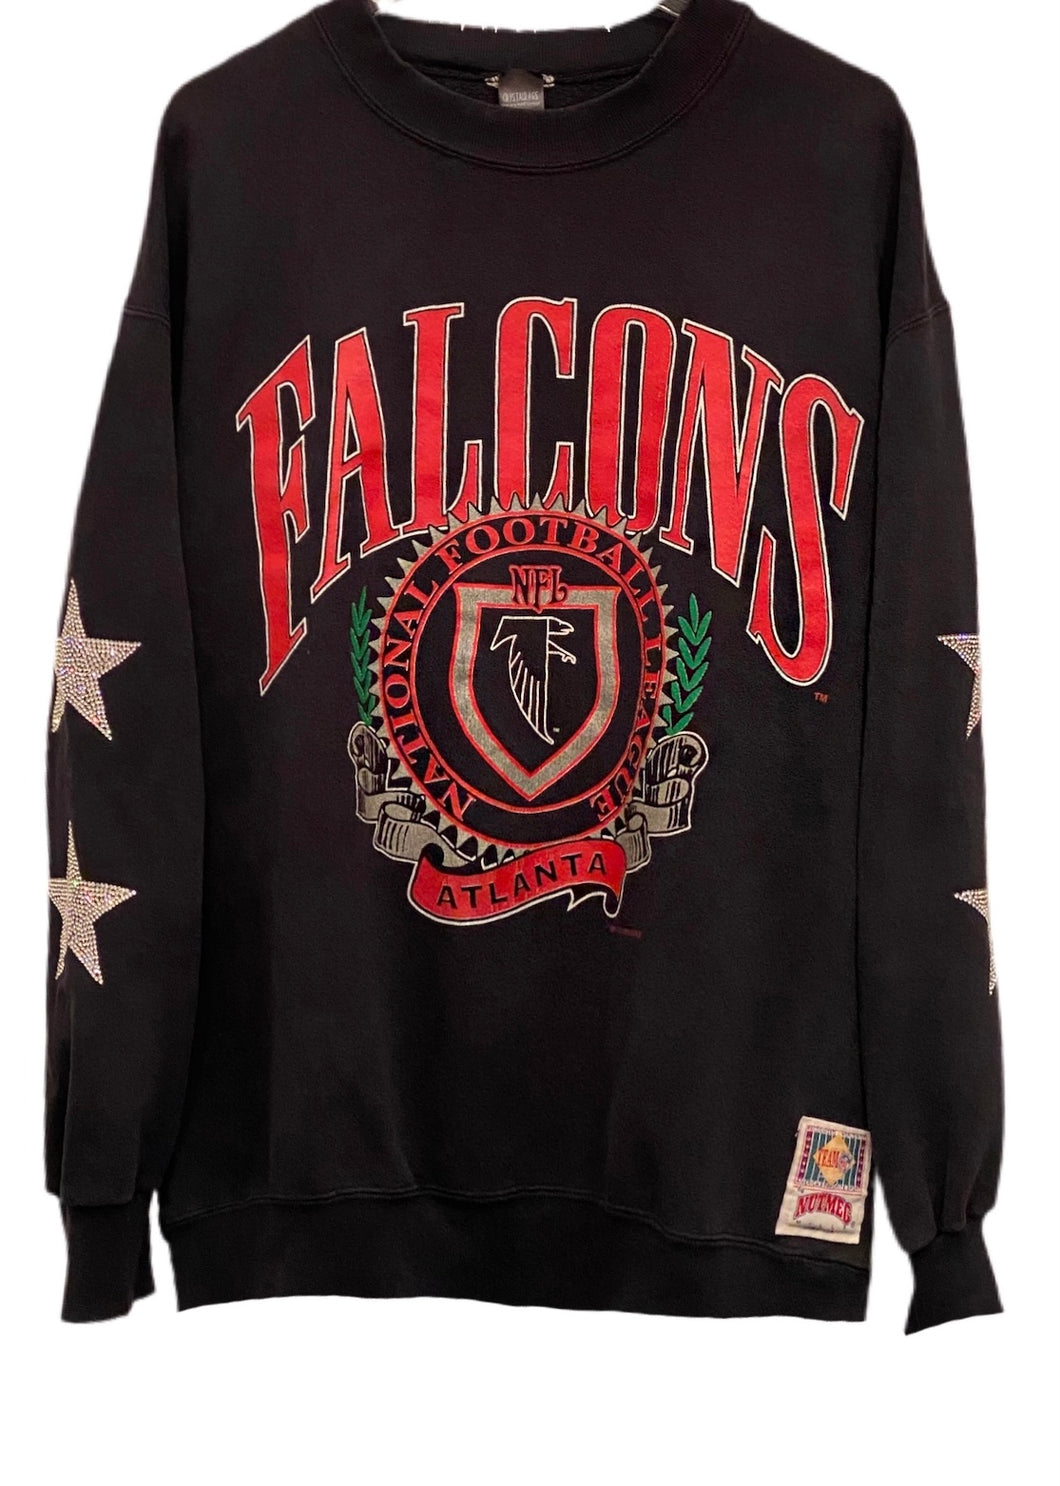 Atlanta Falcons, Football One of a KIND Vintage Sweatshirt with Crystal Star Design